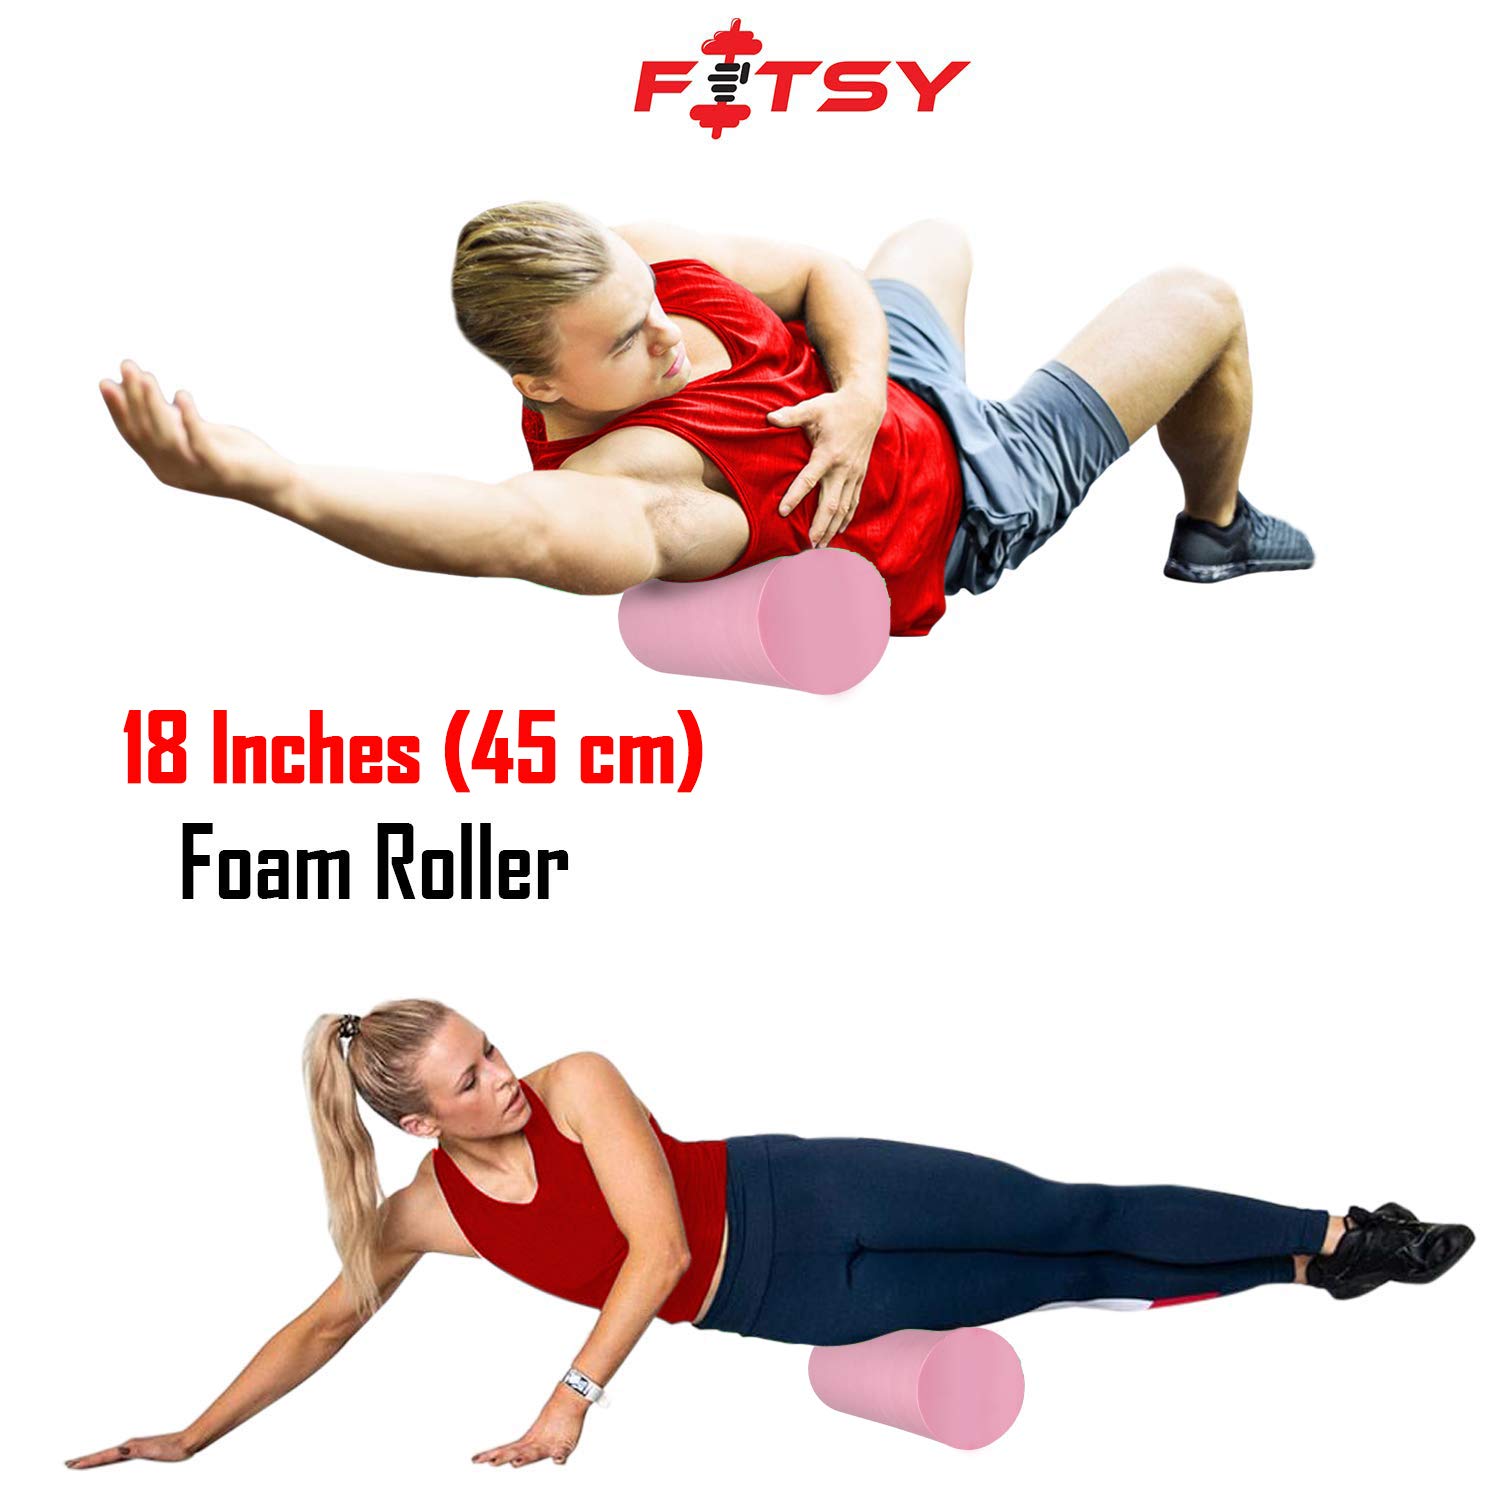 Epe Foam Roller Yoga Pilates Workout Exercise Gym Massage Injury Red 45cm 